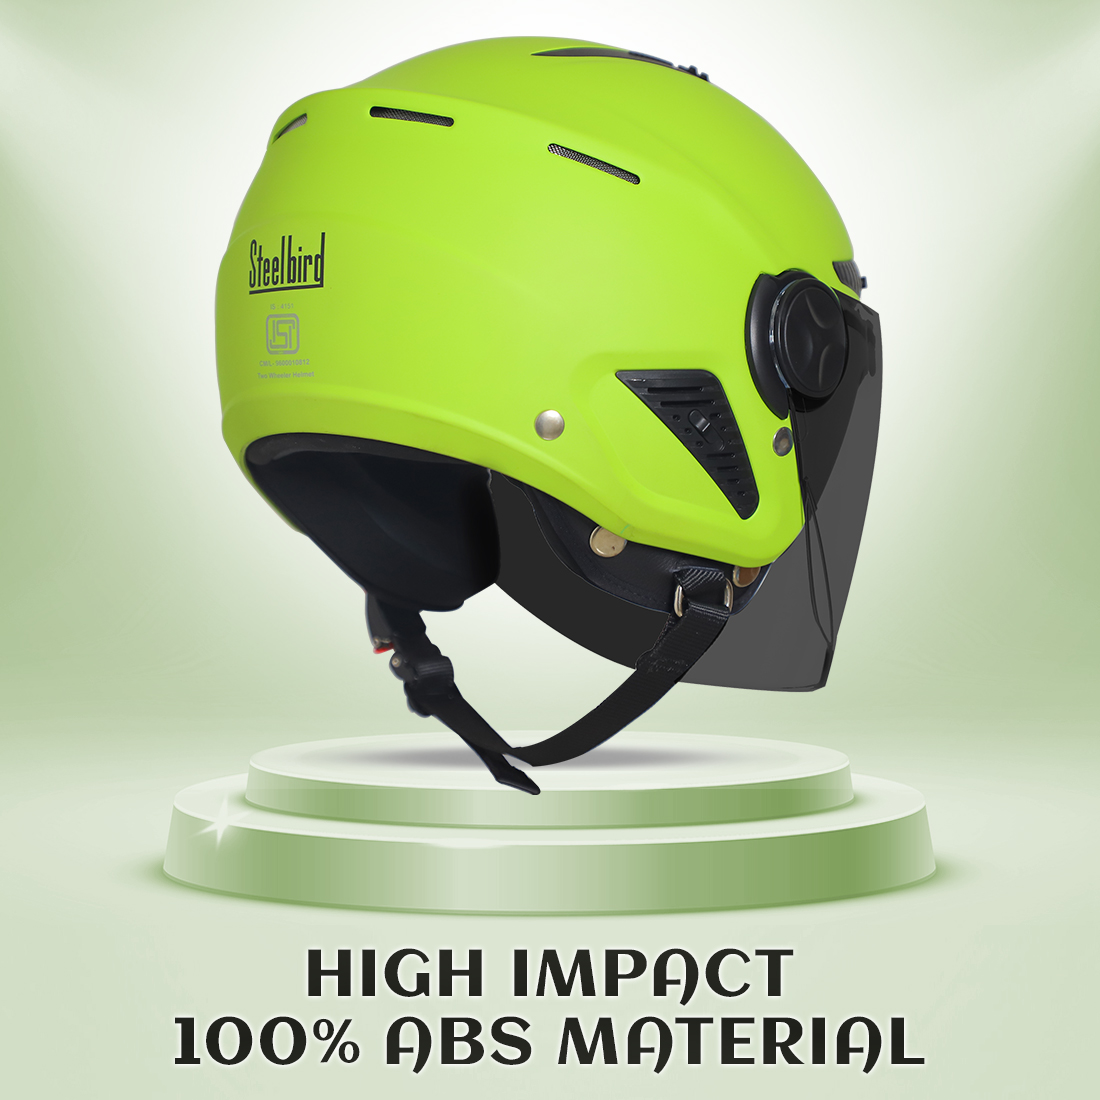 Steelbird SBH-24 Boxx ISI Certified Open Face Helmet For Men And Women (Matt Yellow Green With Smoke Visor)